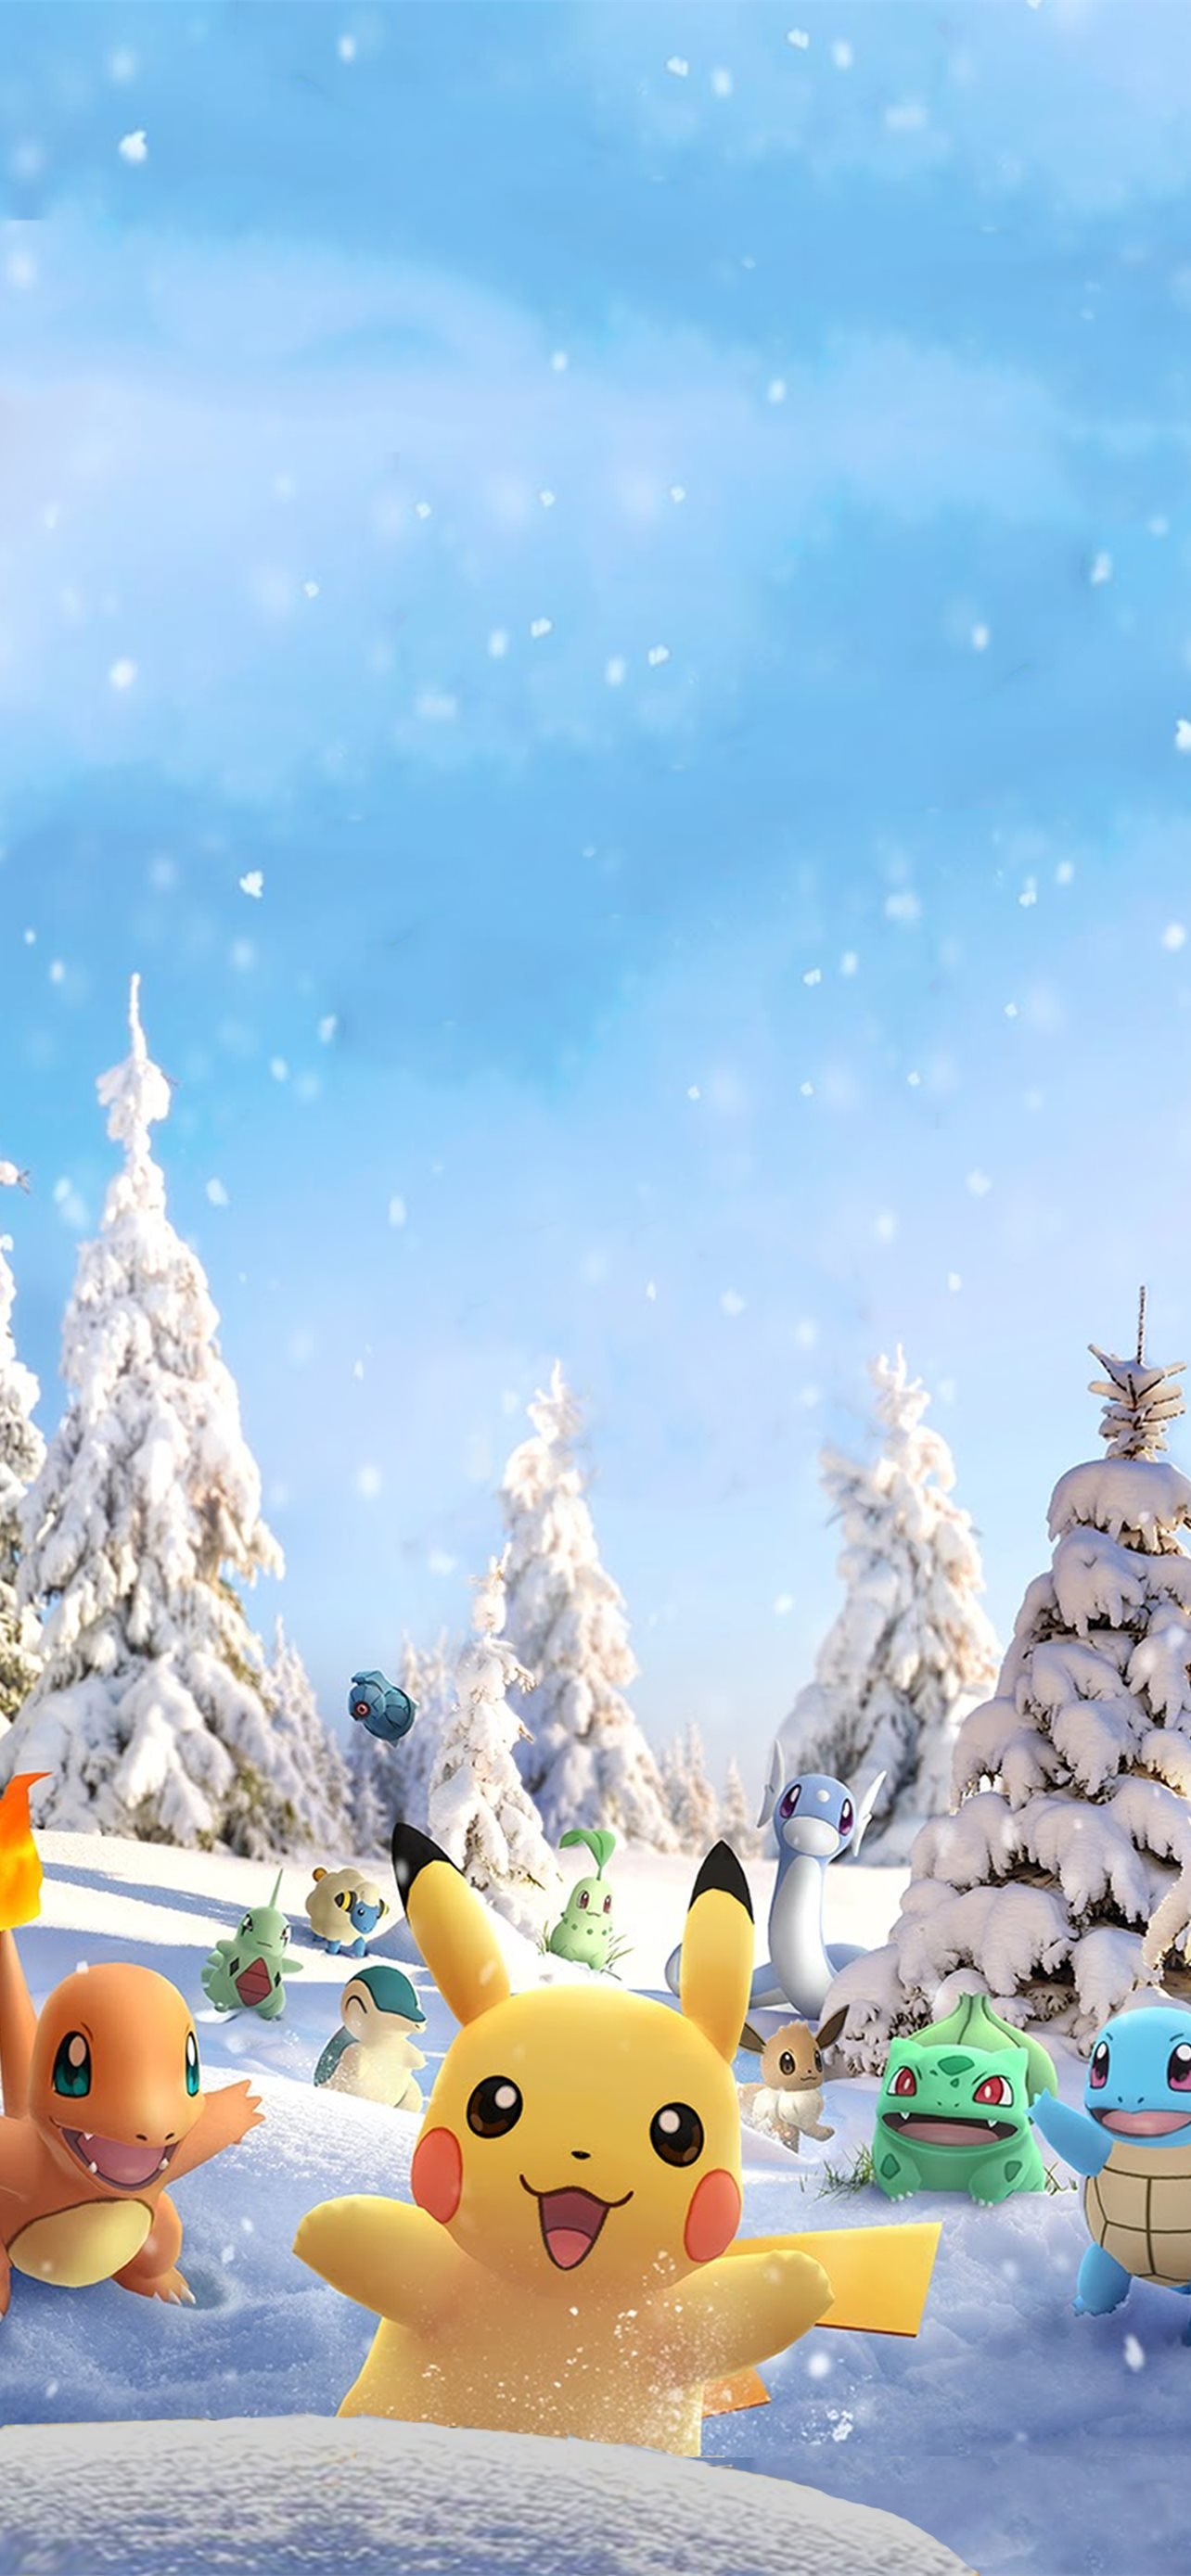 Pokemon Go Winter iPhone Wallpaper Free Download